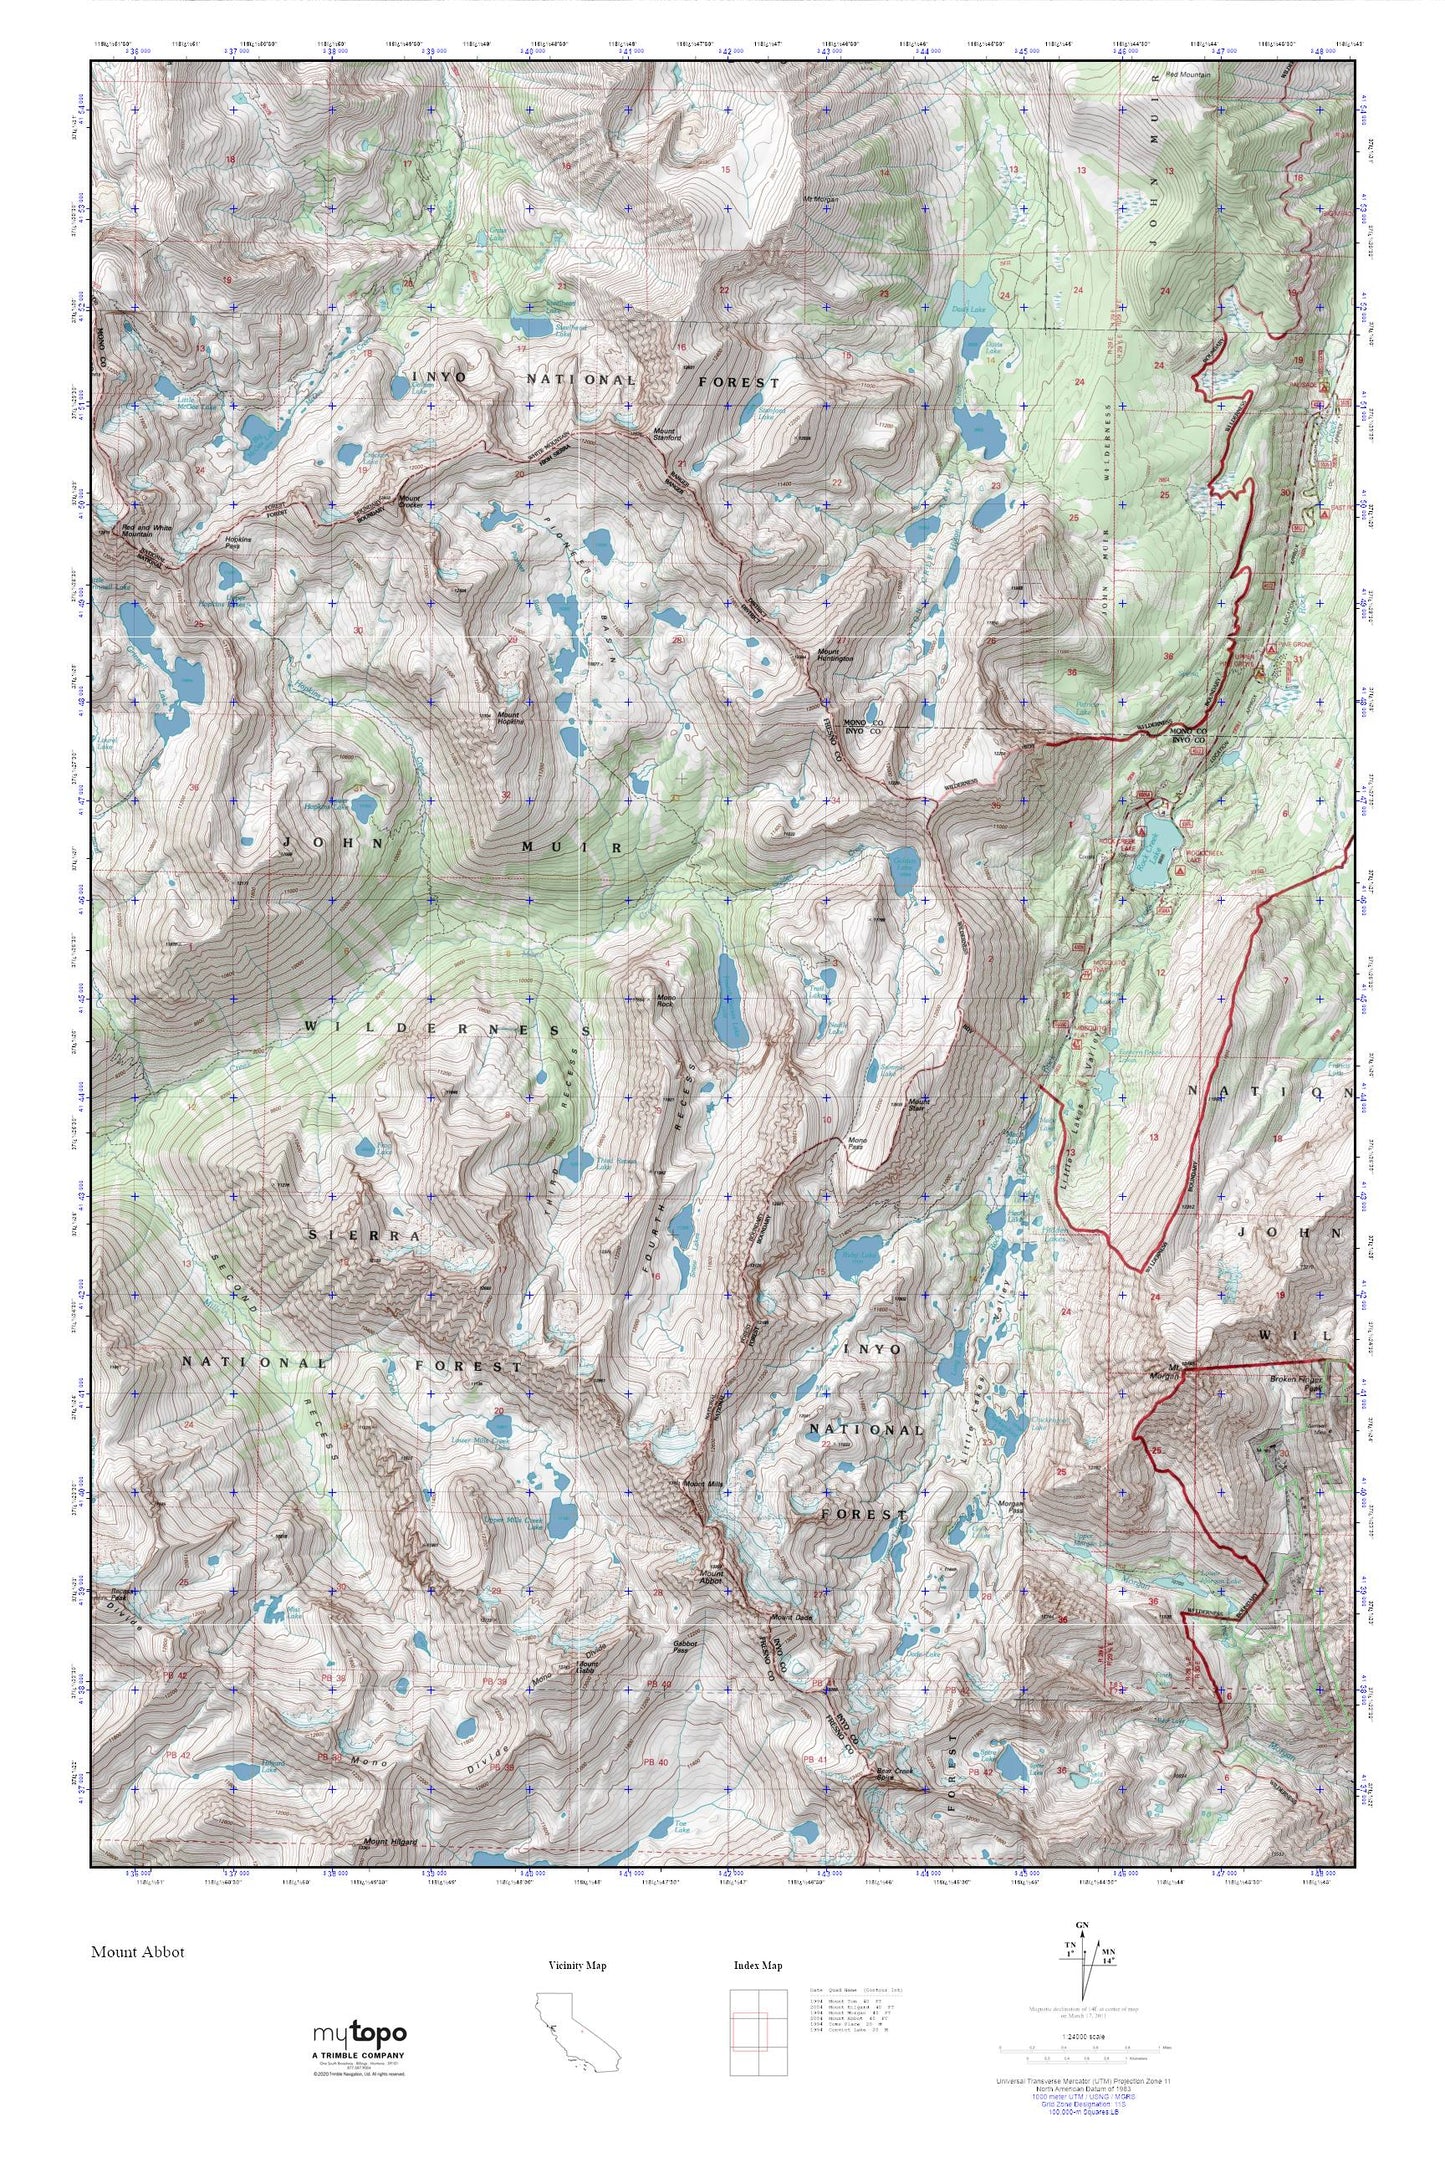 Mount Abbot MyTopo Explorer Series Map Image